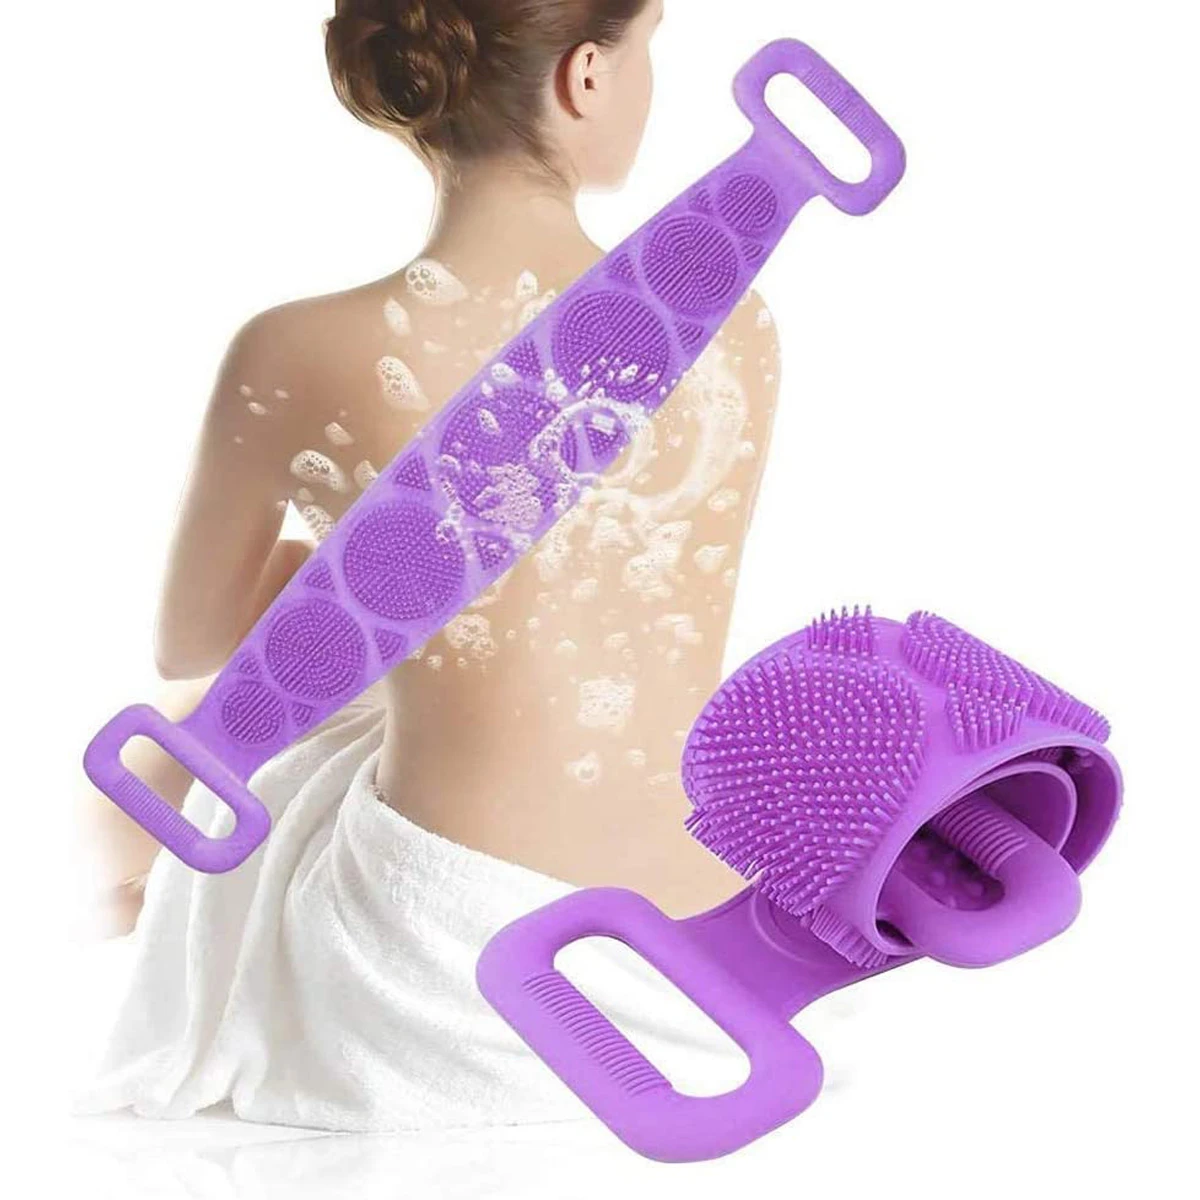 Silicone Body Double Side Shower Exfoliating Belt Wash. Silicone Body Scrubber Bath Shower Towel Back Cleaning Strap Wash Brush Belt Massage Skin Mud Peeling.s